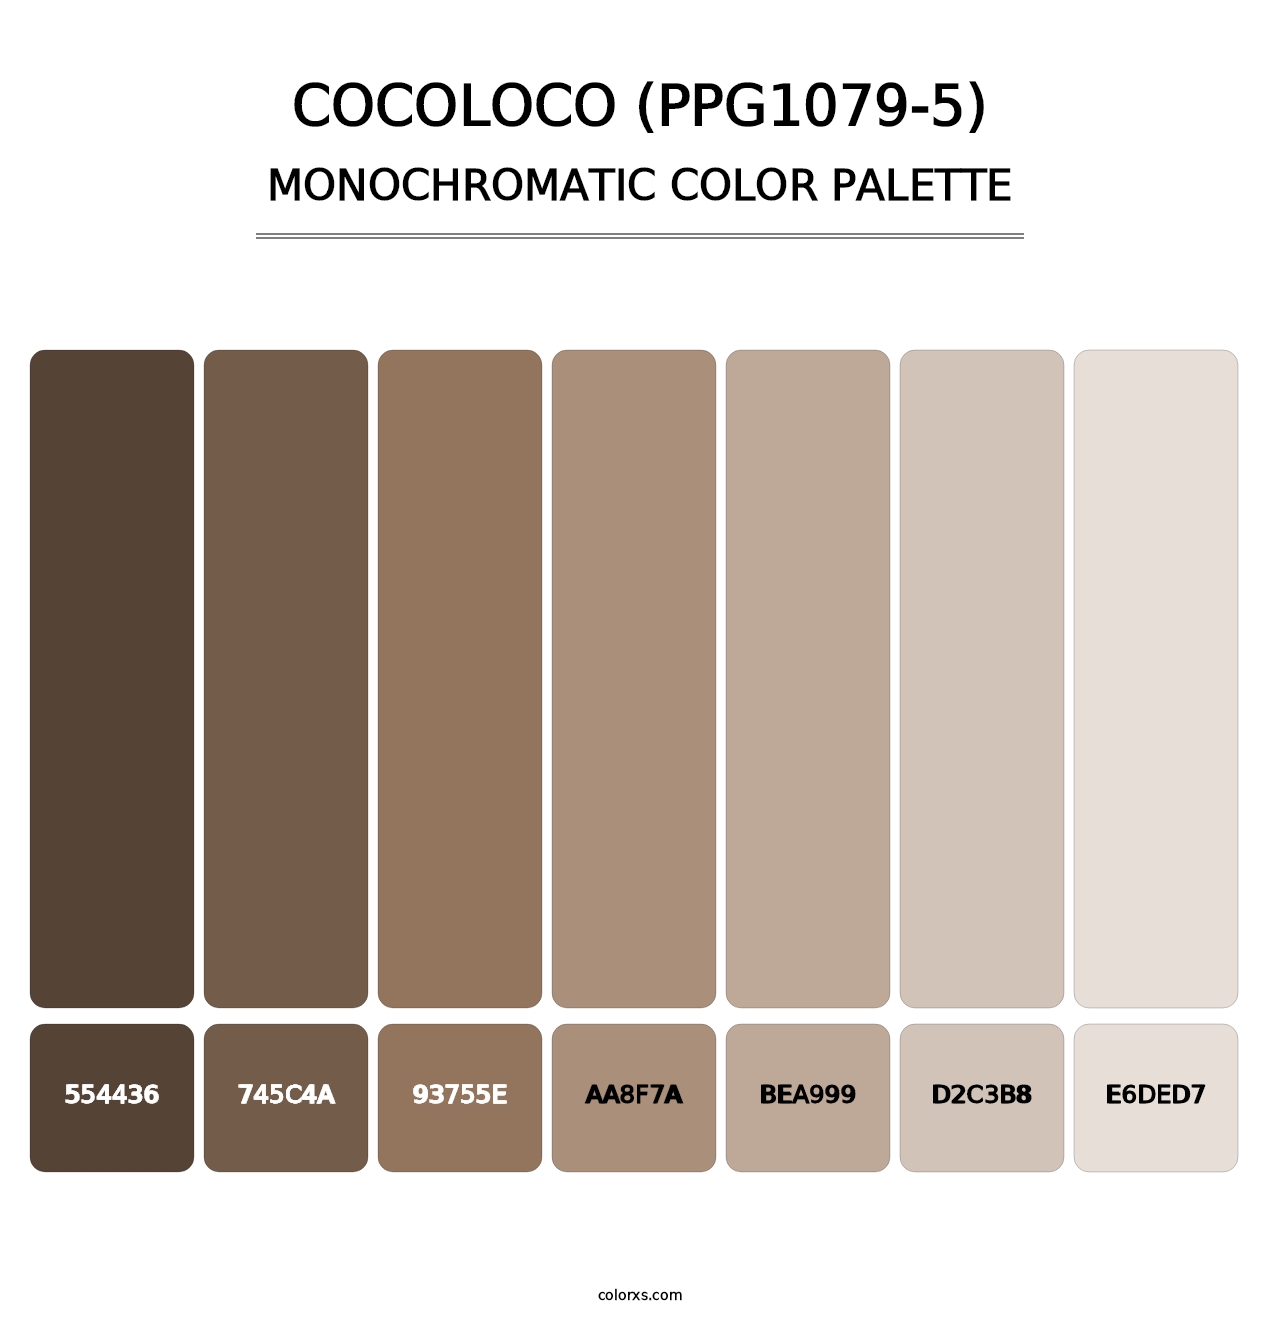 Cocoloco (PPG1079-5) - Monochromatic Color Palette